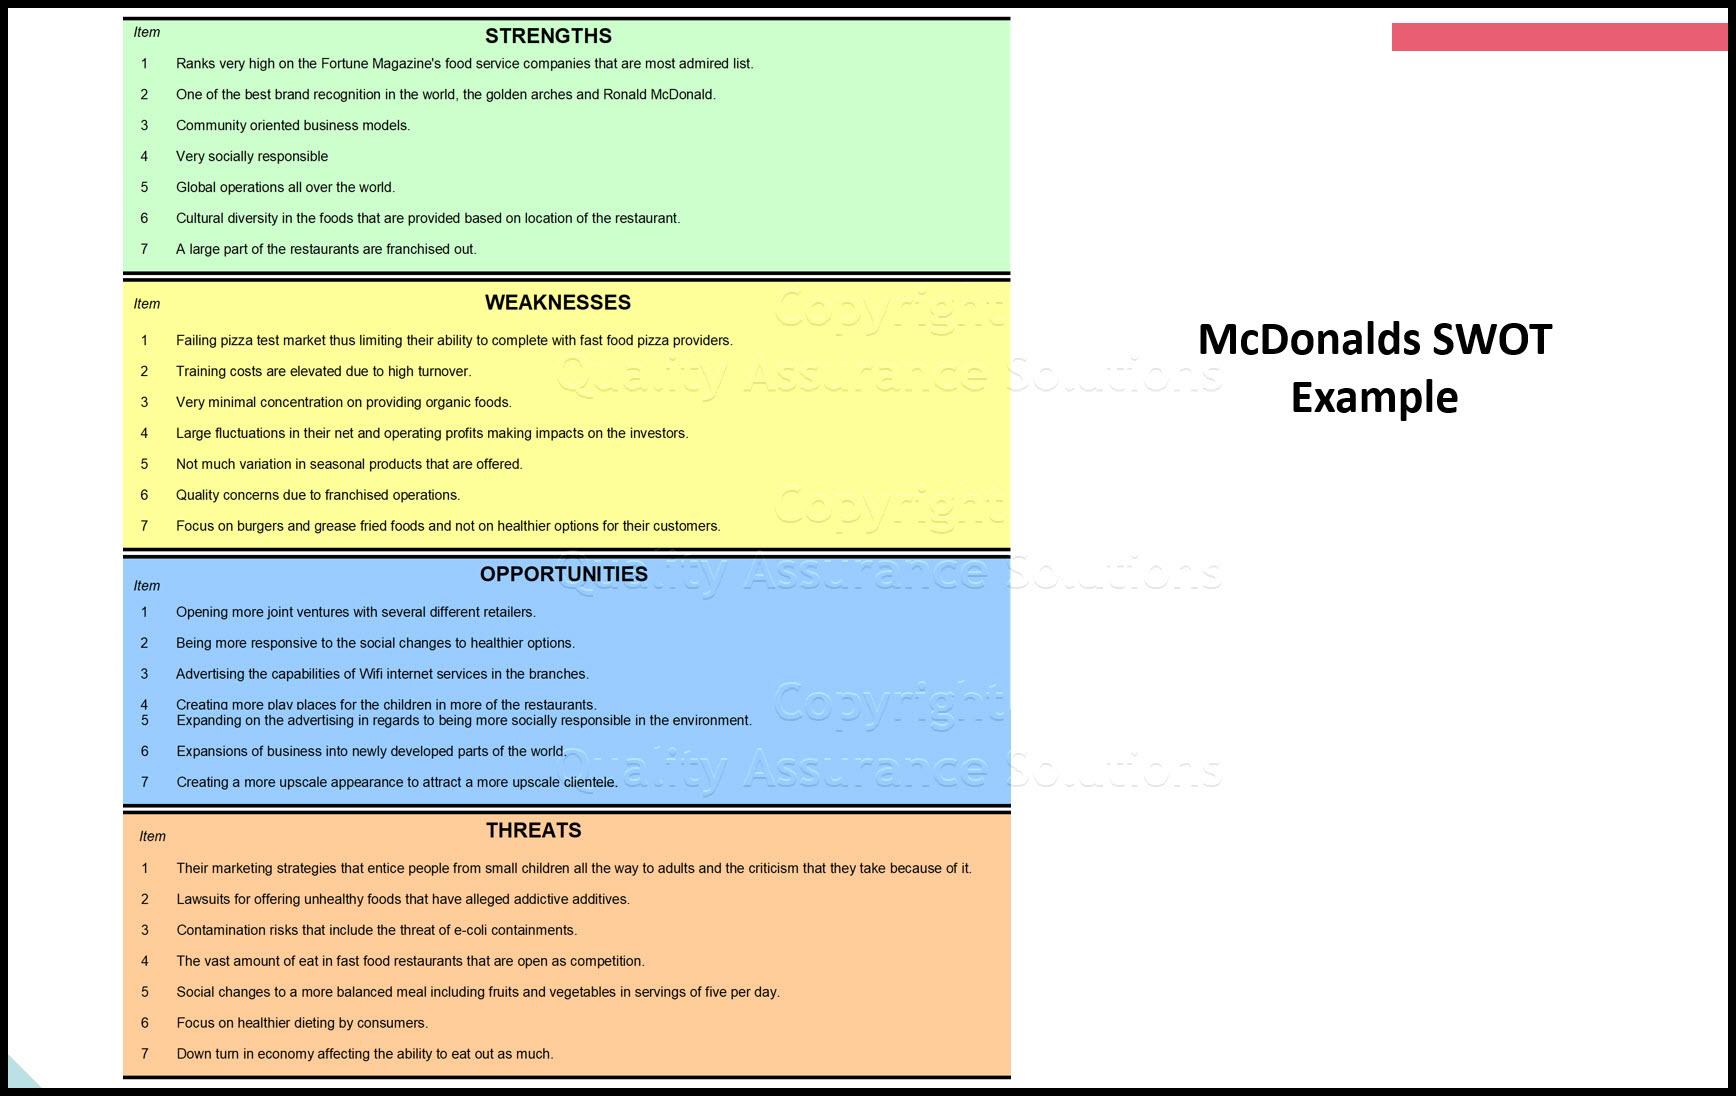 mcdonalds business model analysis